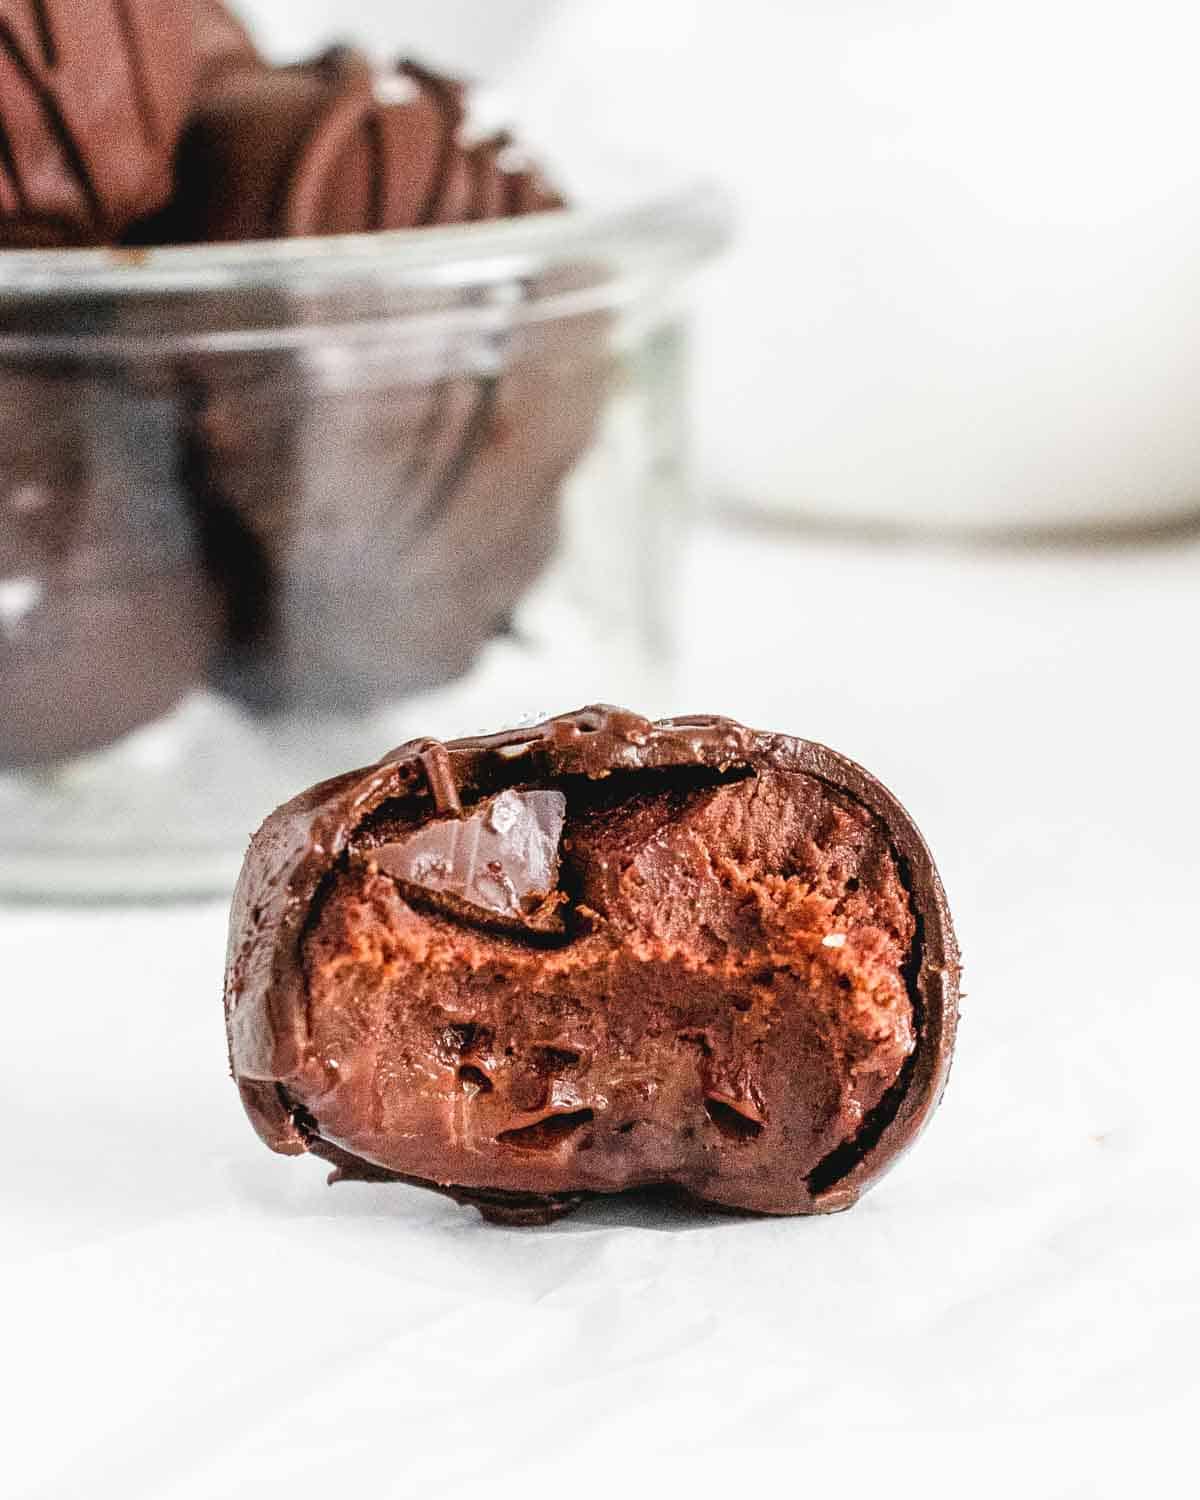 A close up bite shot of chocolate truffles 